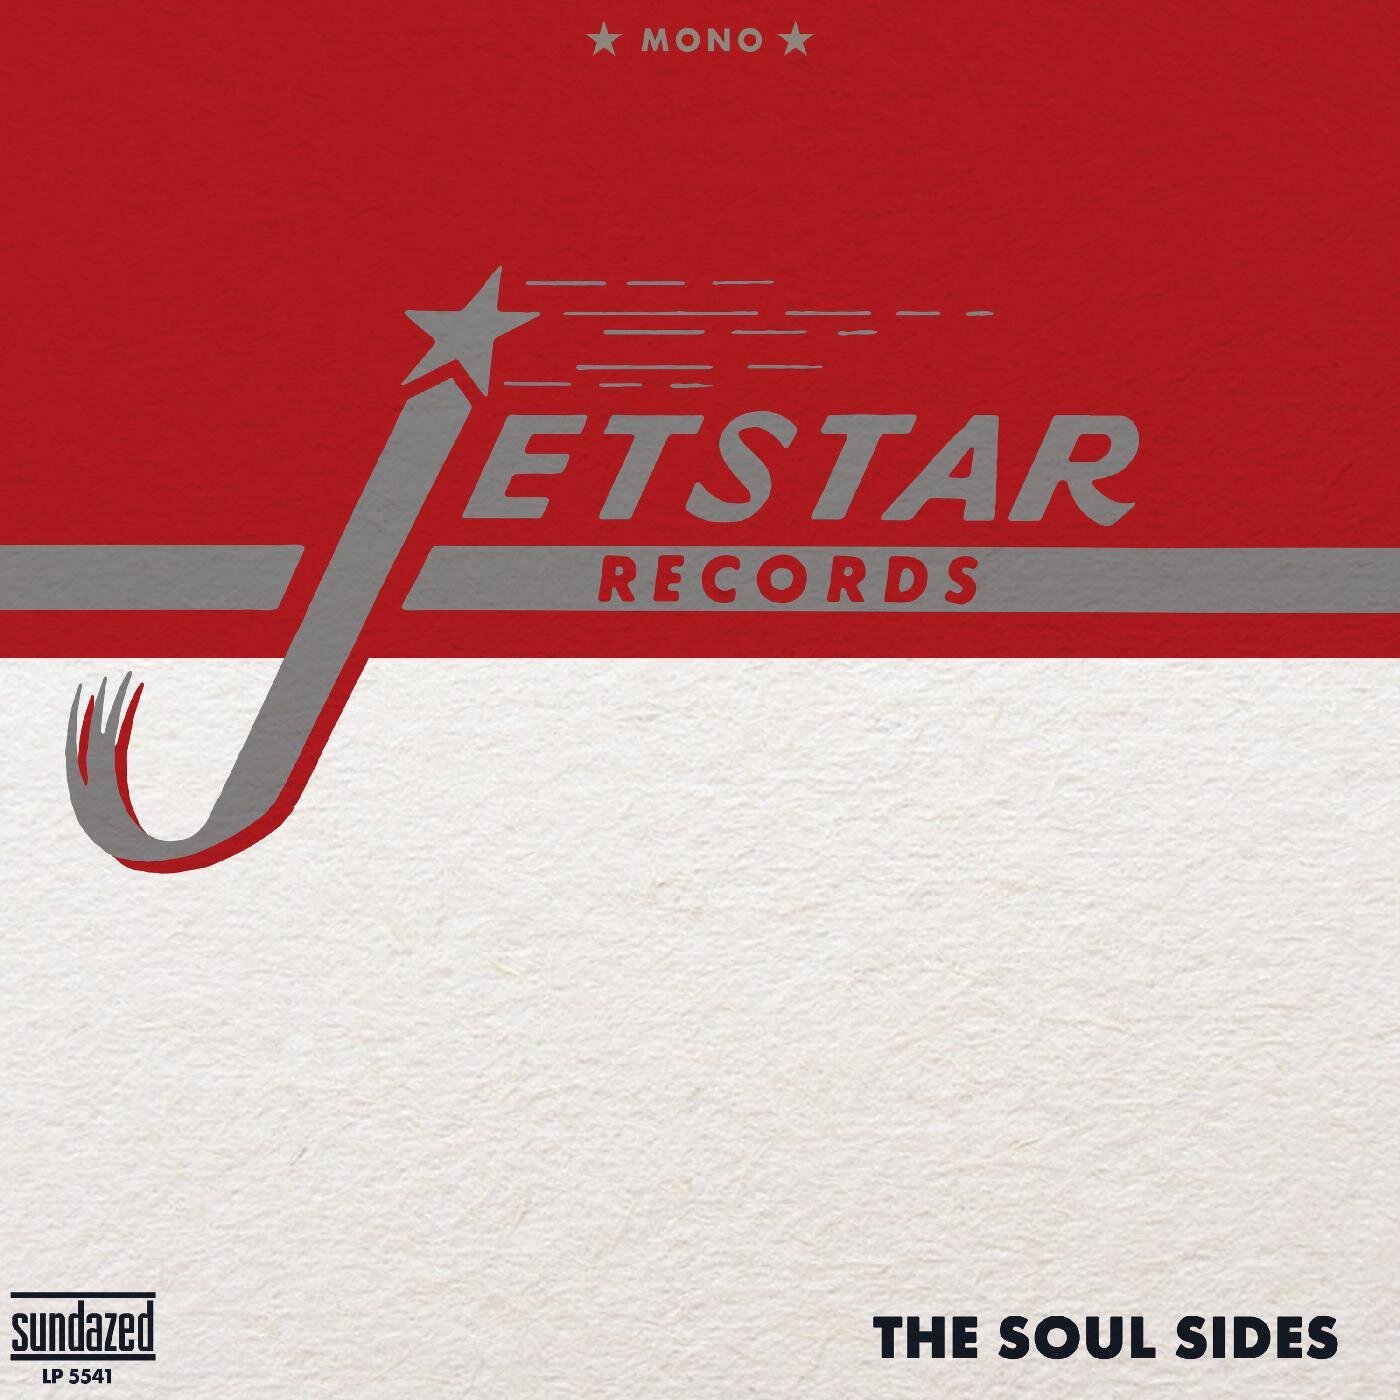 |v/a| "Jetstar Records: The Soul Sides" [Clear Vinyl]